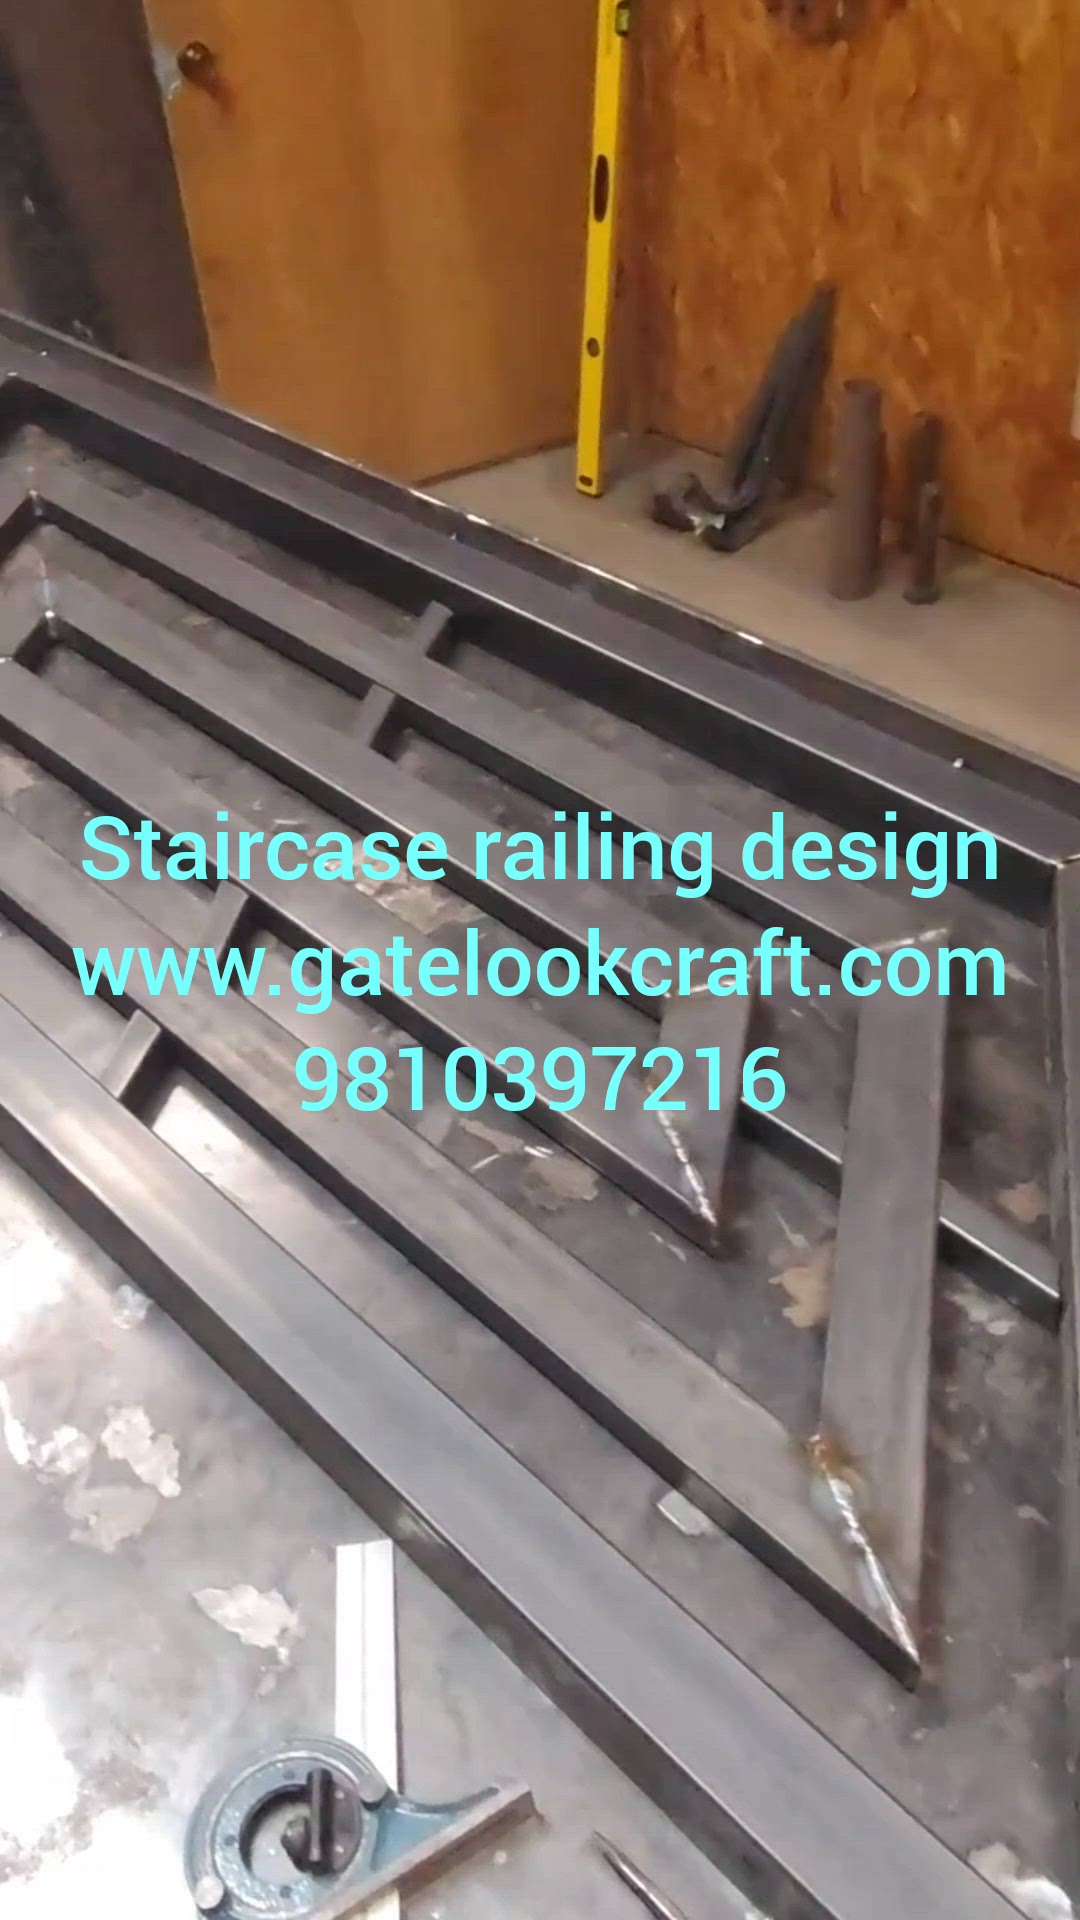 Staircase railing design by Hibza sterling interiors pvt ltd #gatelookcraft #railing #staircaserailing #staircase #balconyrailing